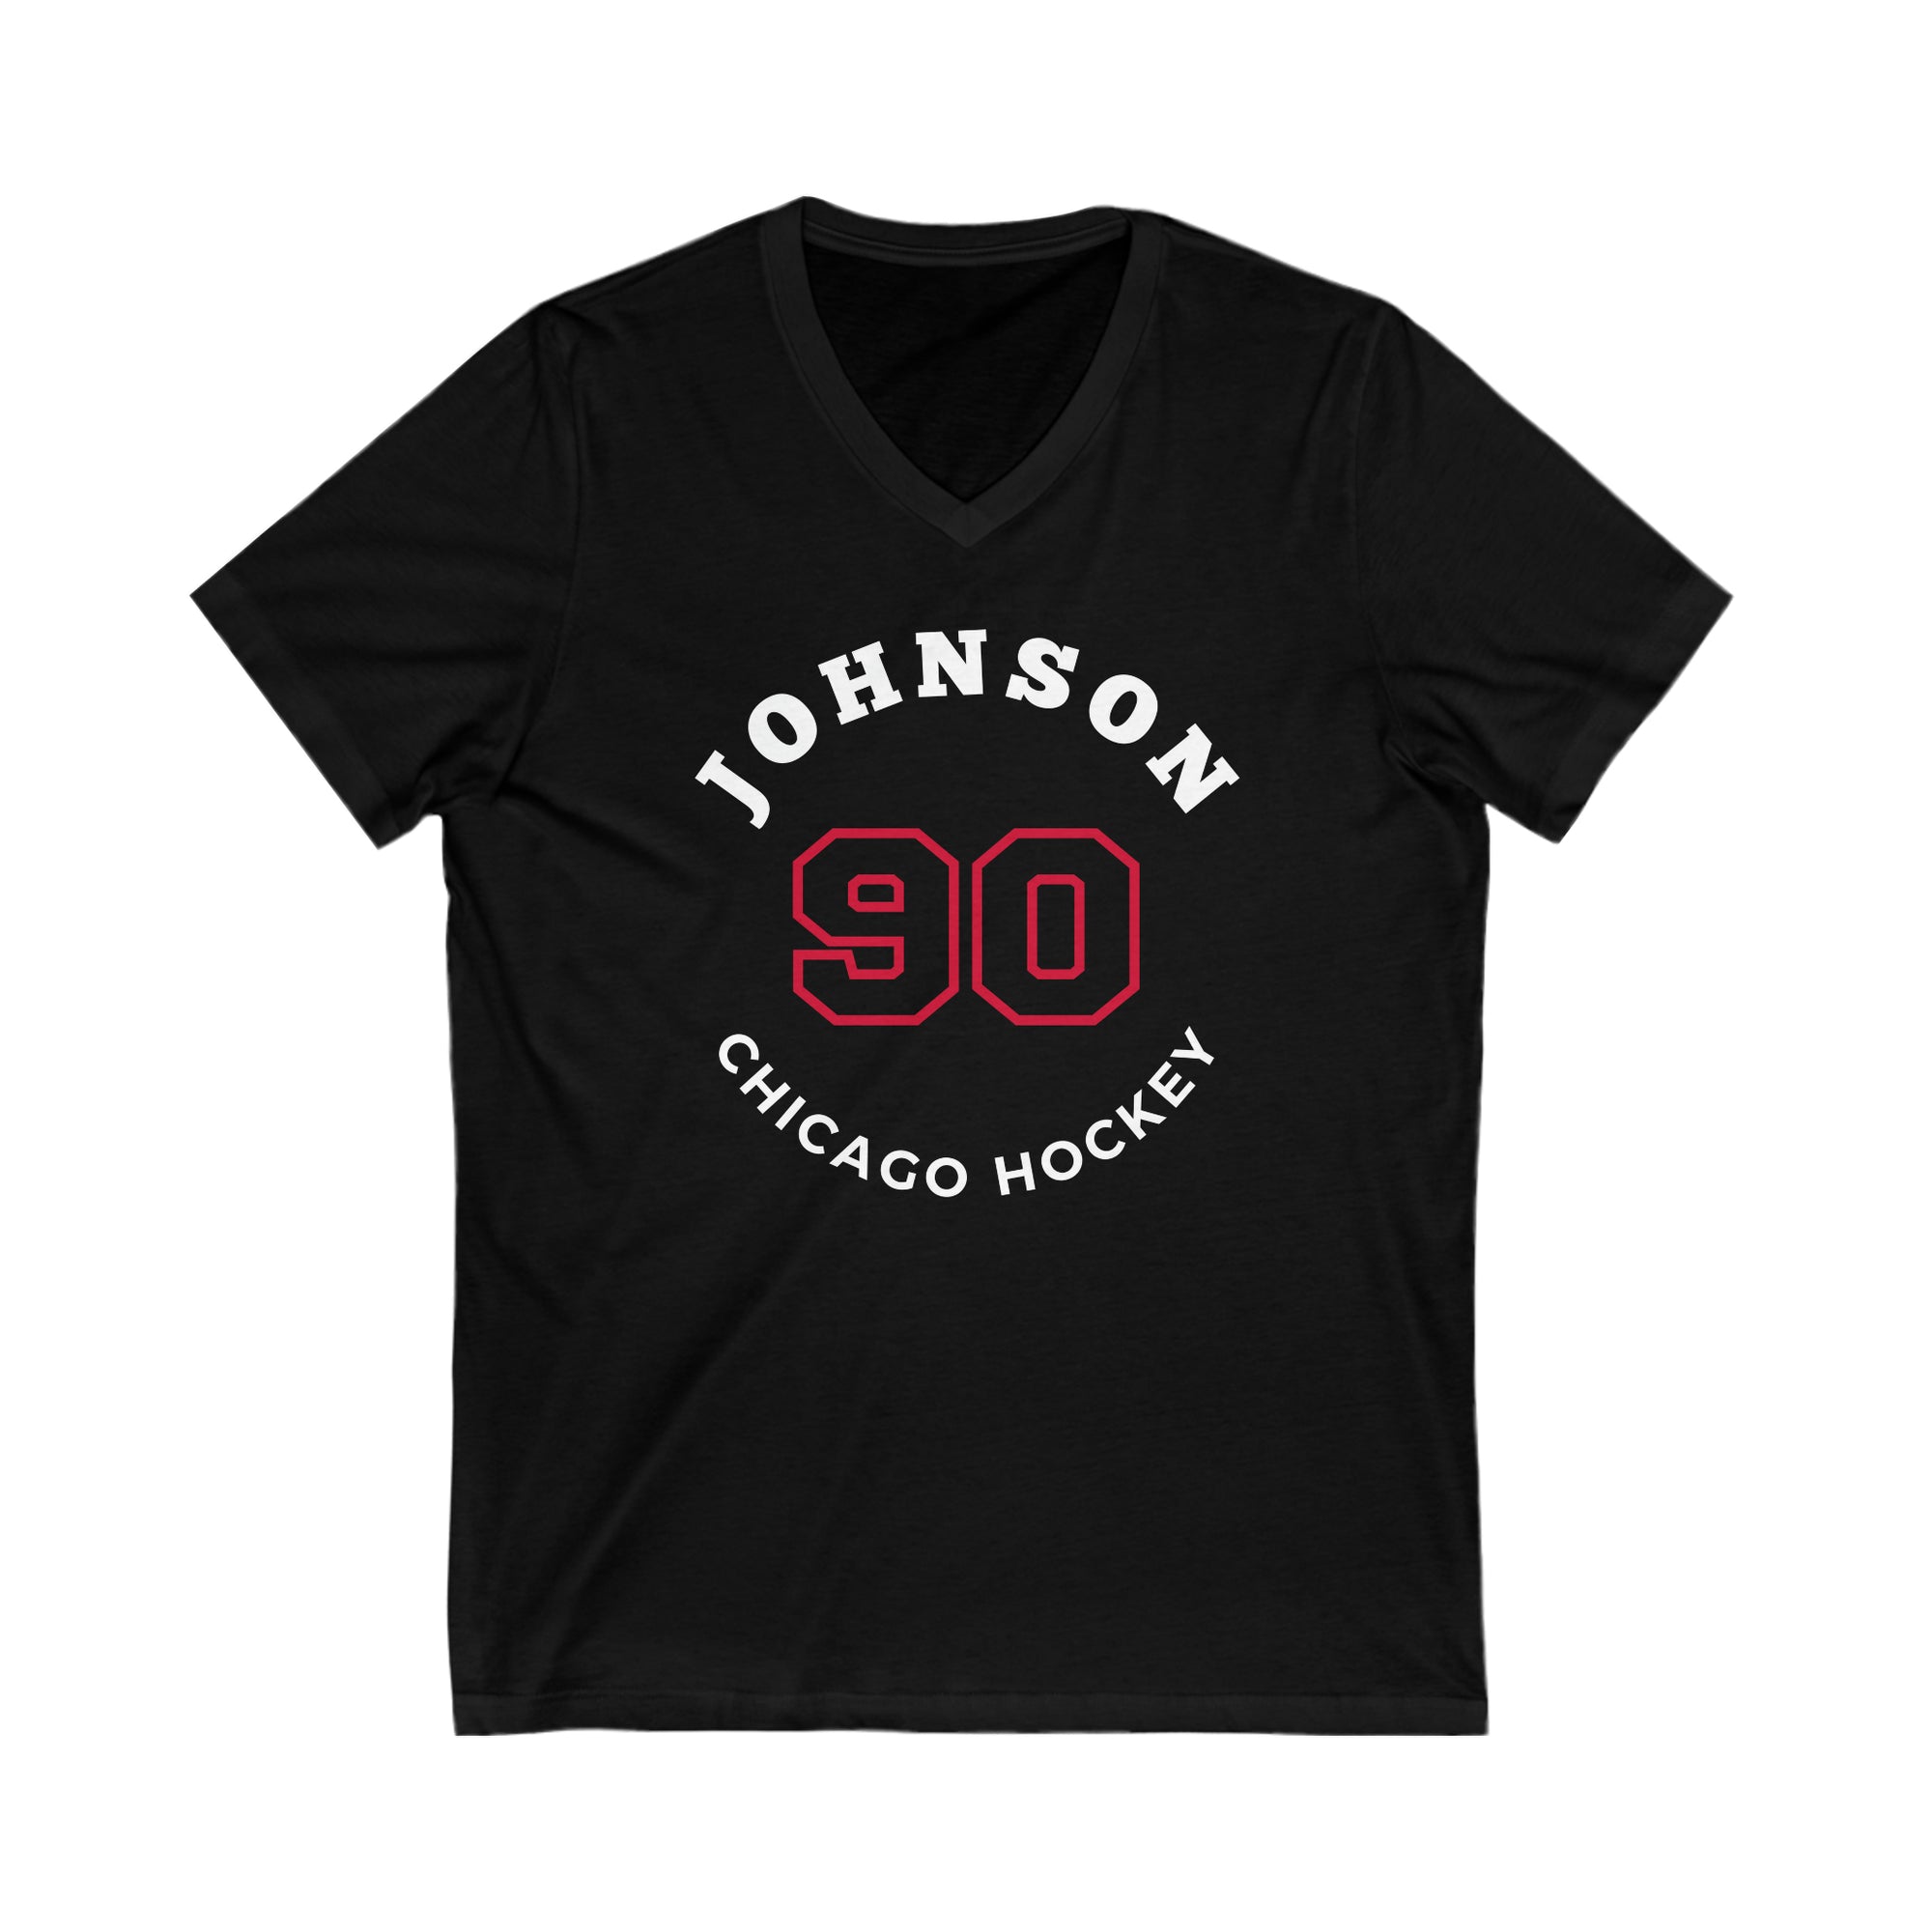 Johnson 90 Chicago Hockey Number Arch Design Unisex V-Neck Tee